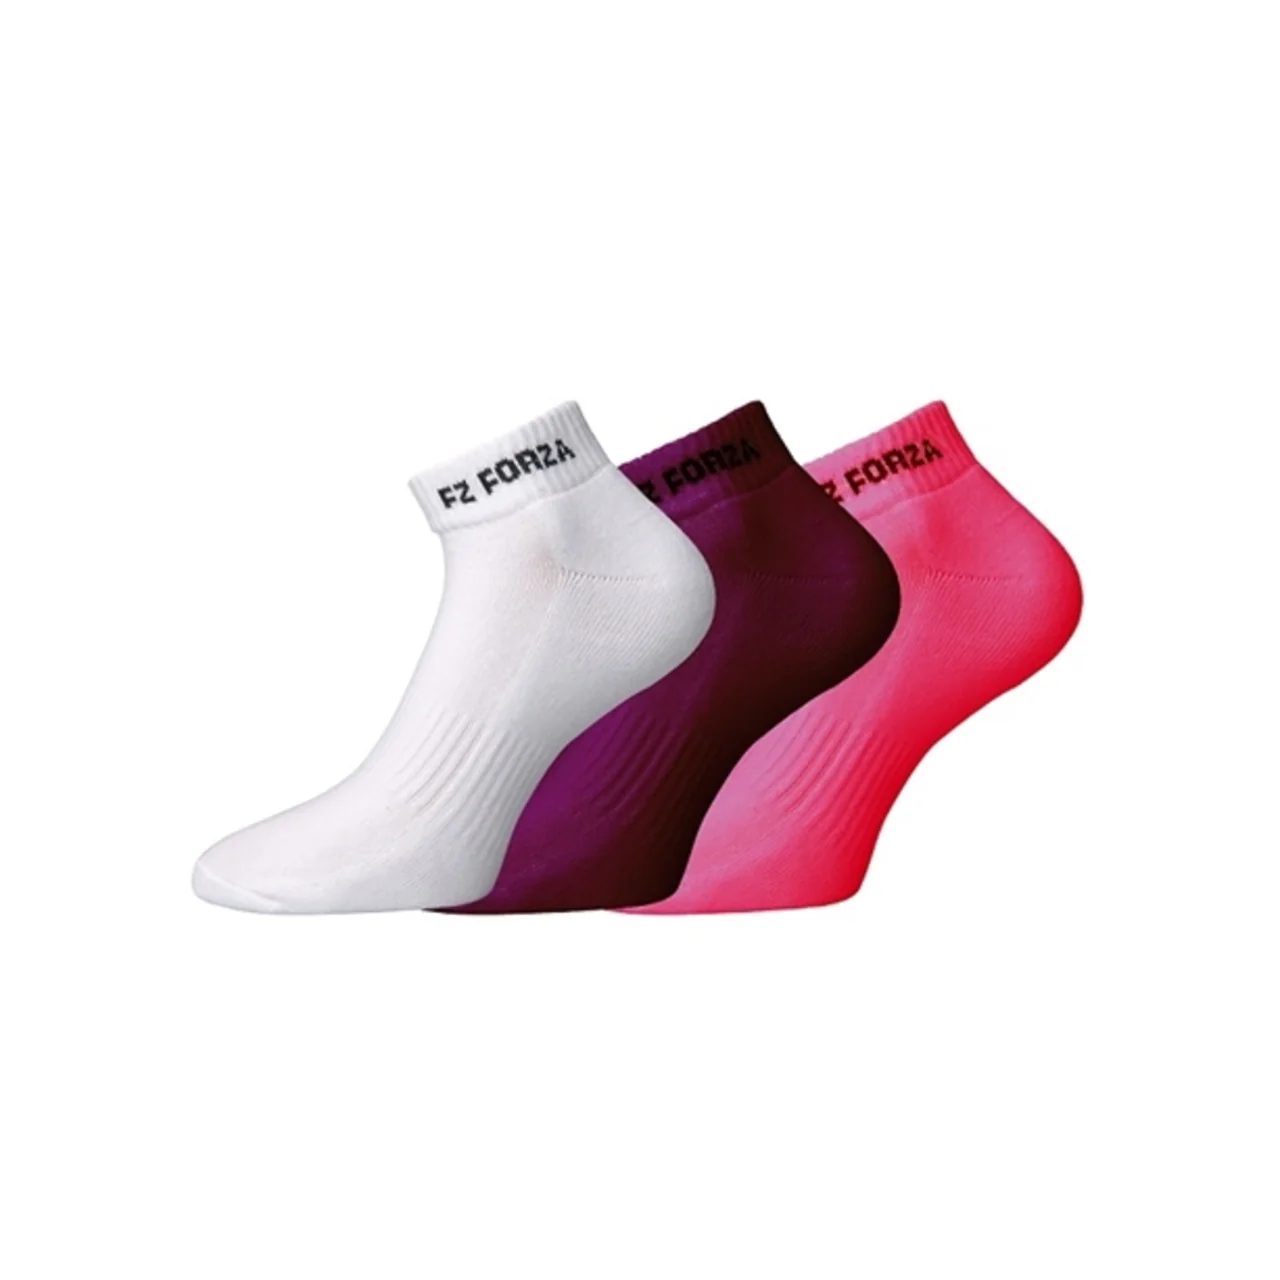 FZ Forza Comfort Sock Short x3 Multi Colour